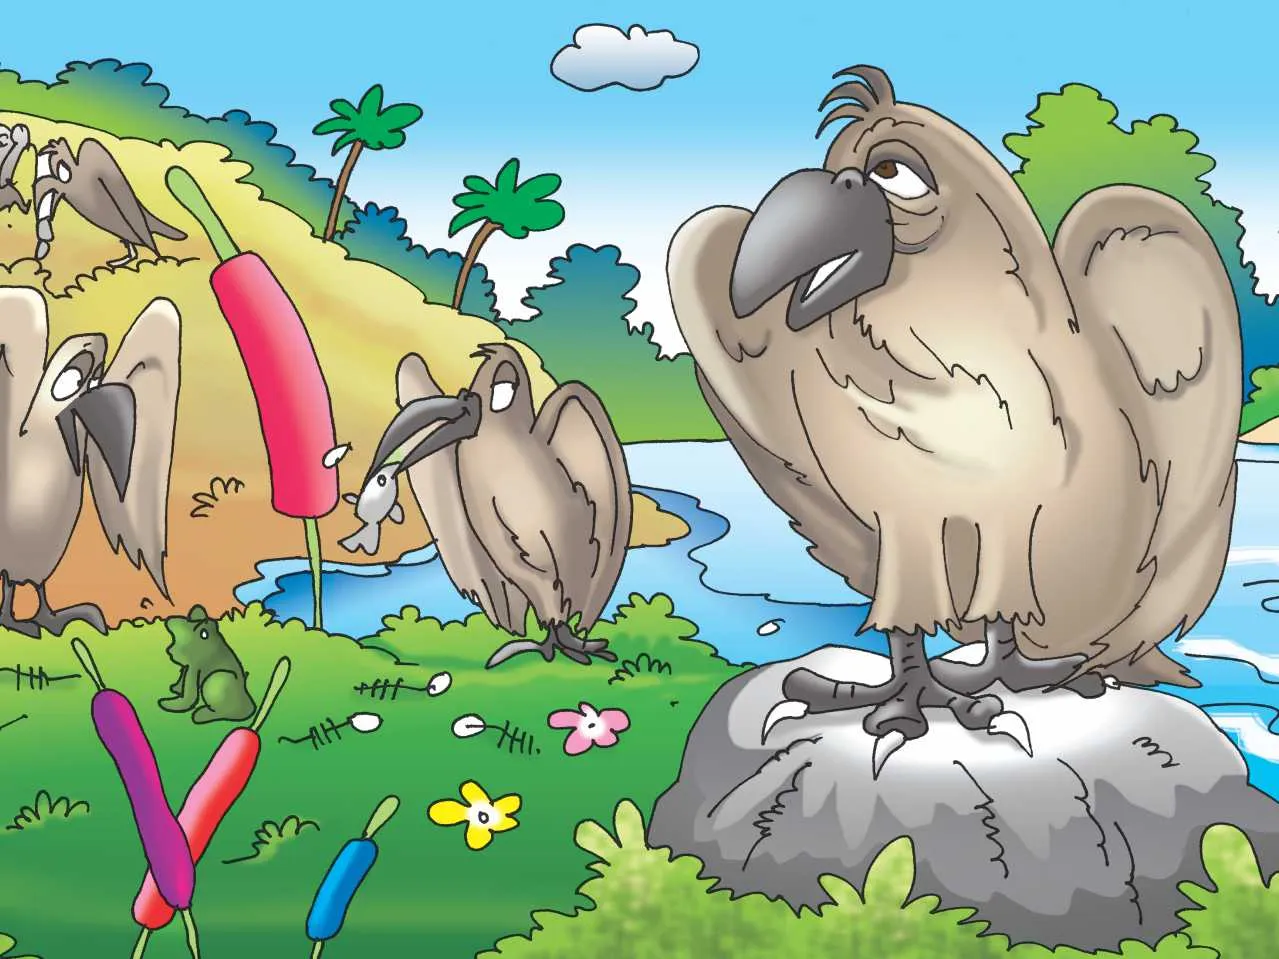 Vultures cartoon image